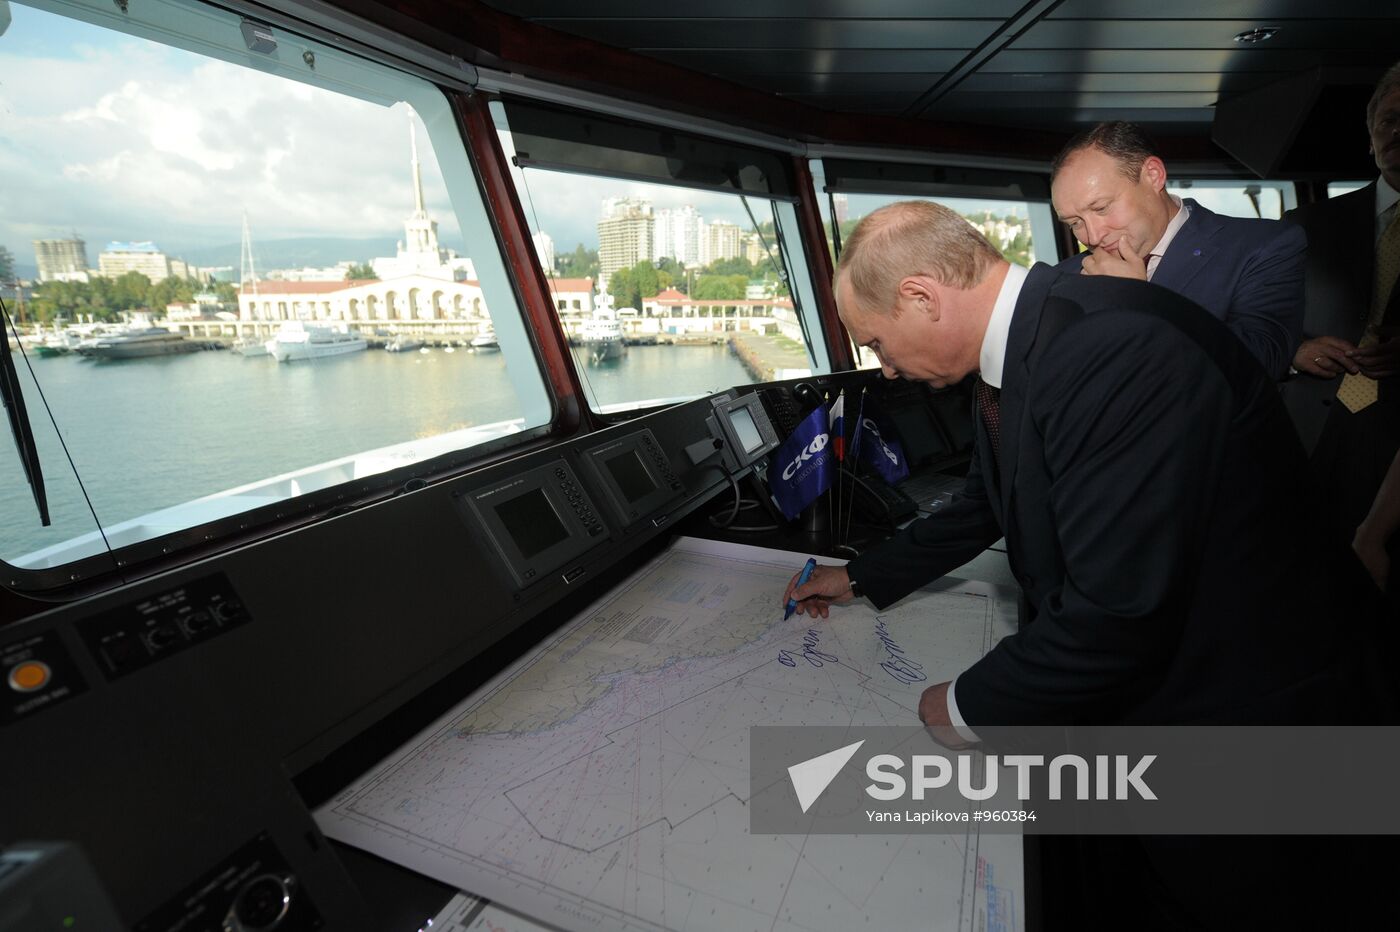 Vladimir Putin visits "Vyacheslav Tikhonov" ship